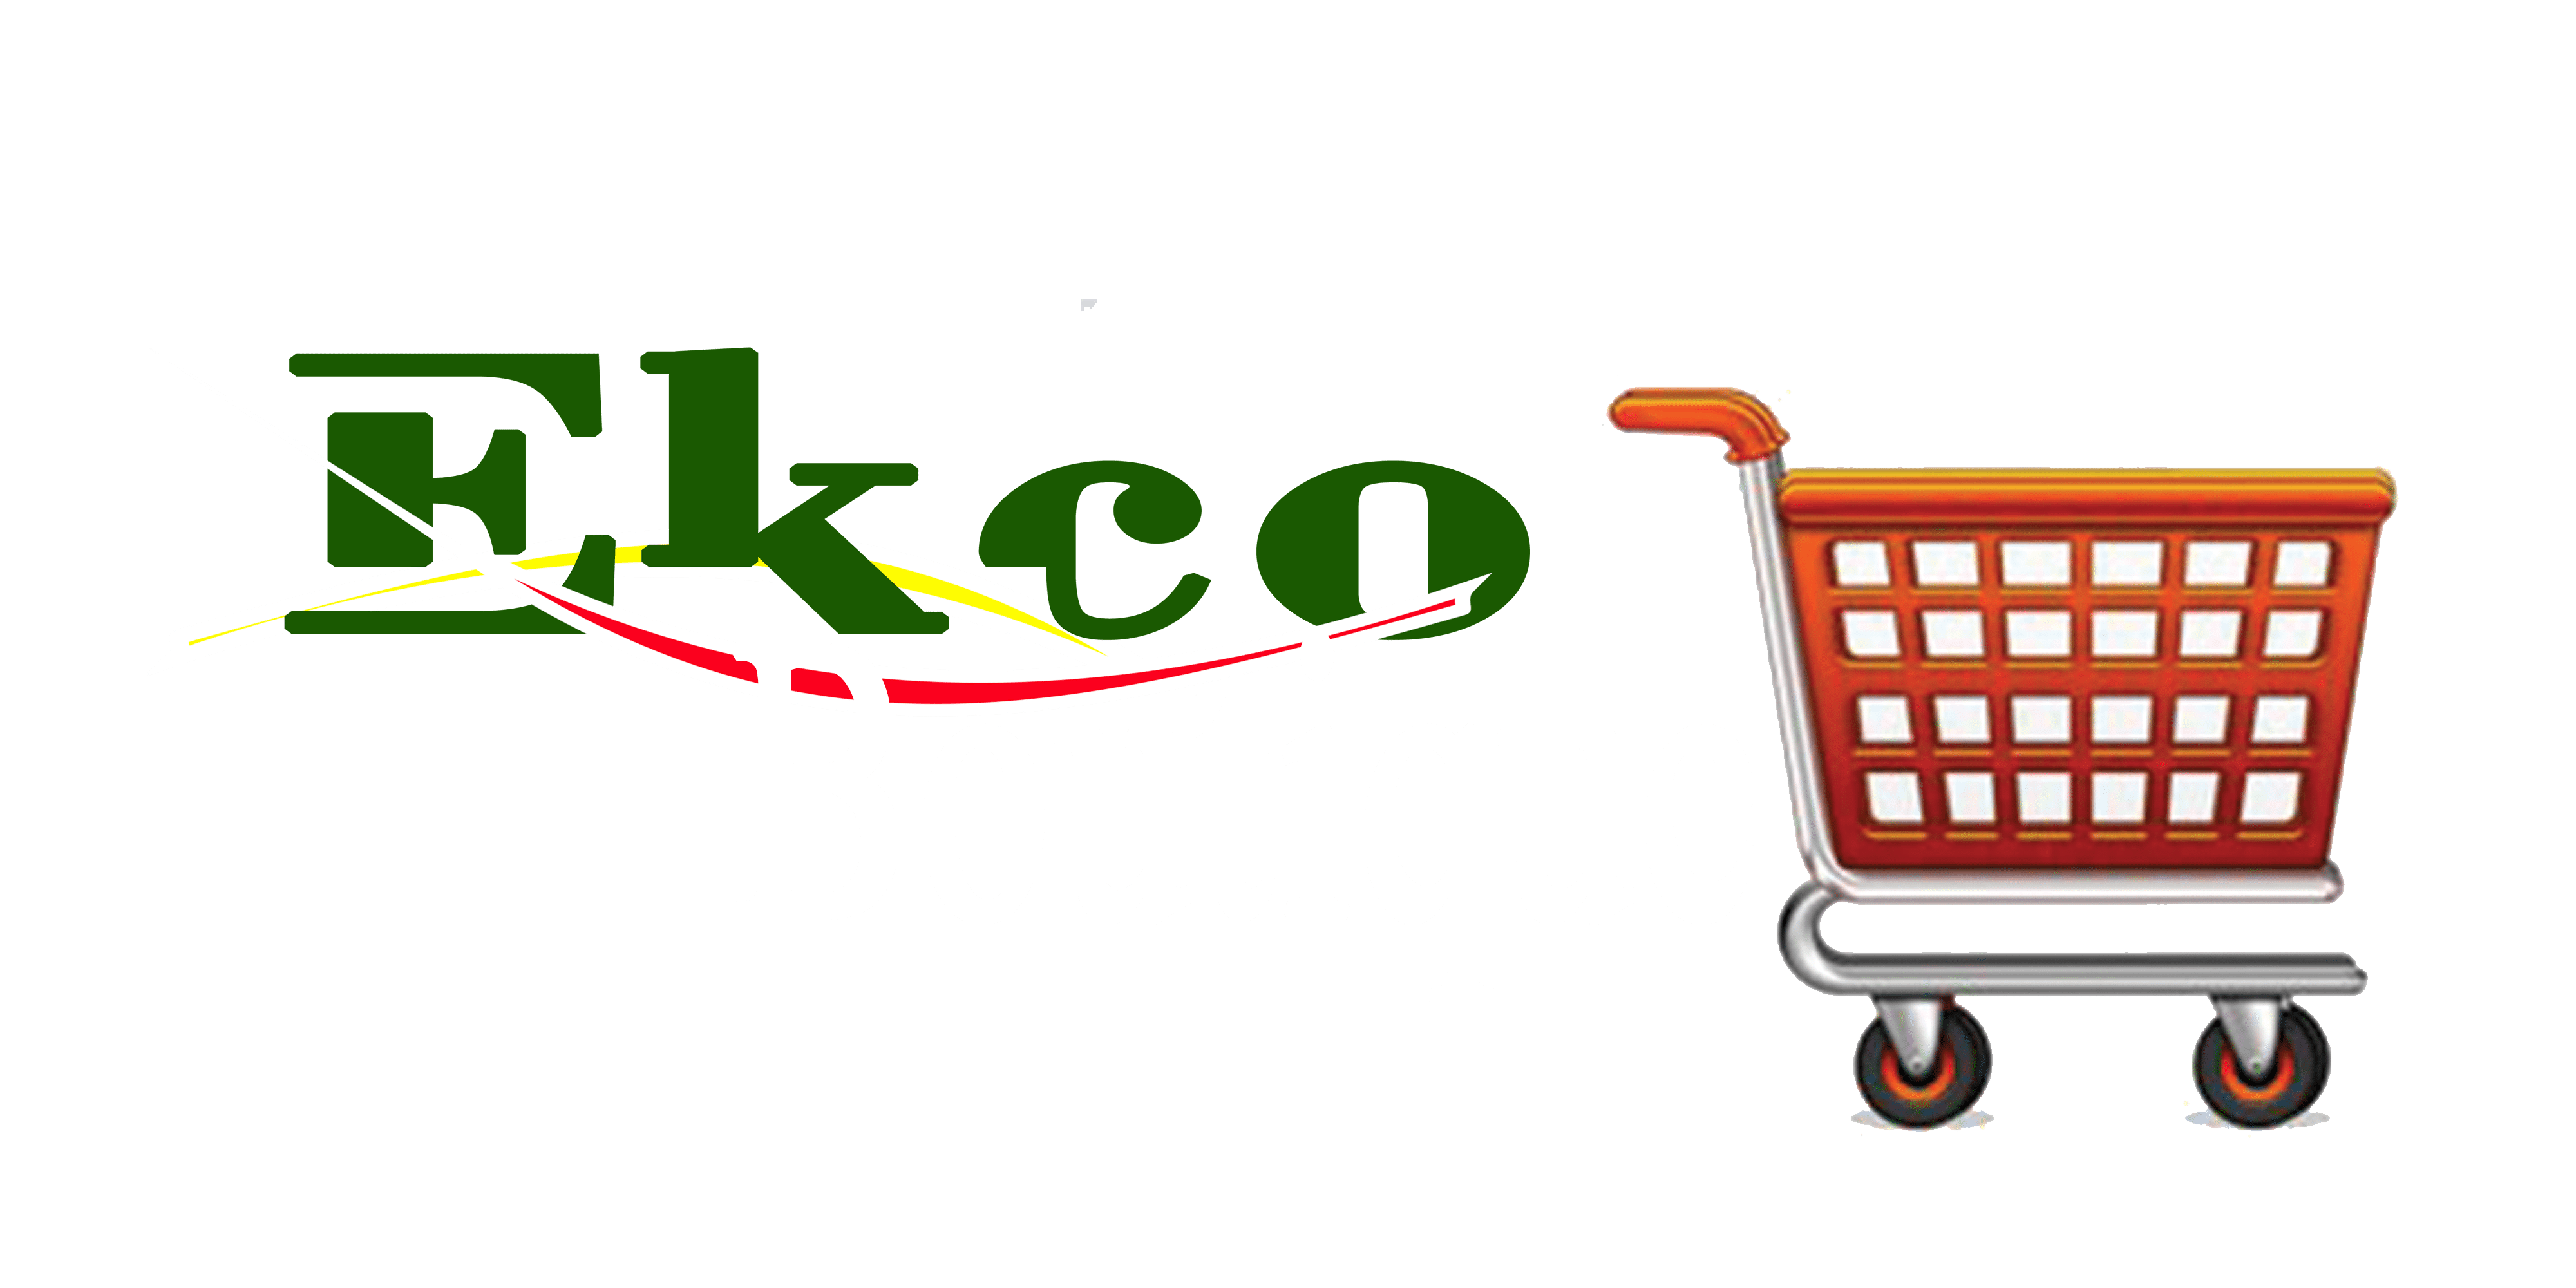 Ekco boutique